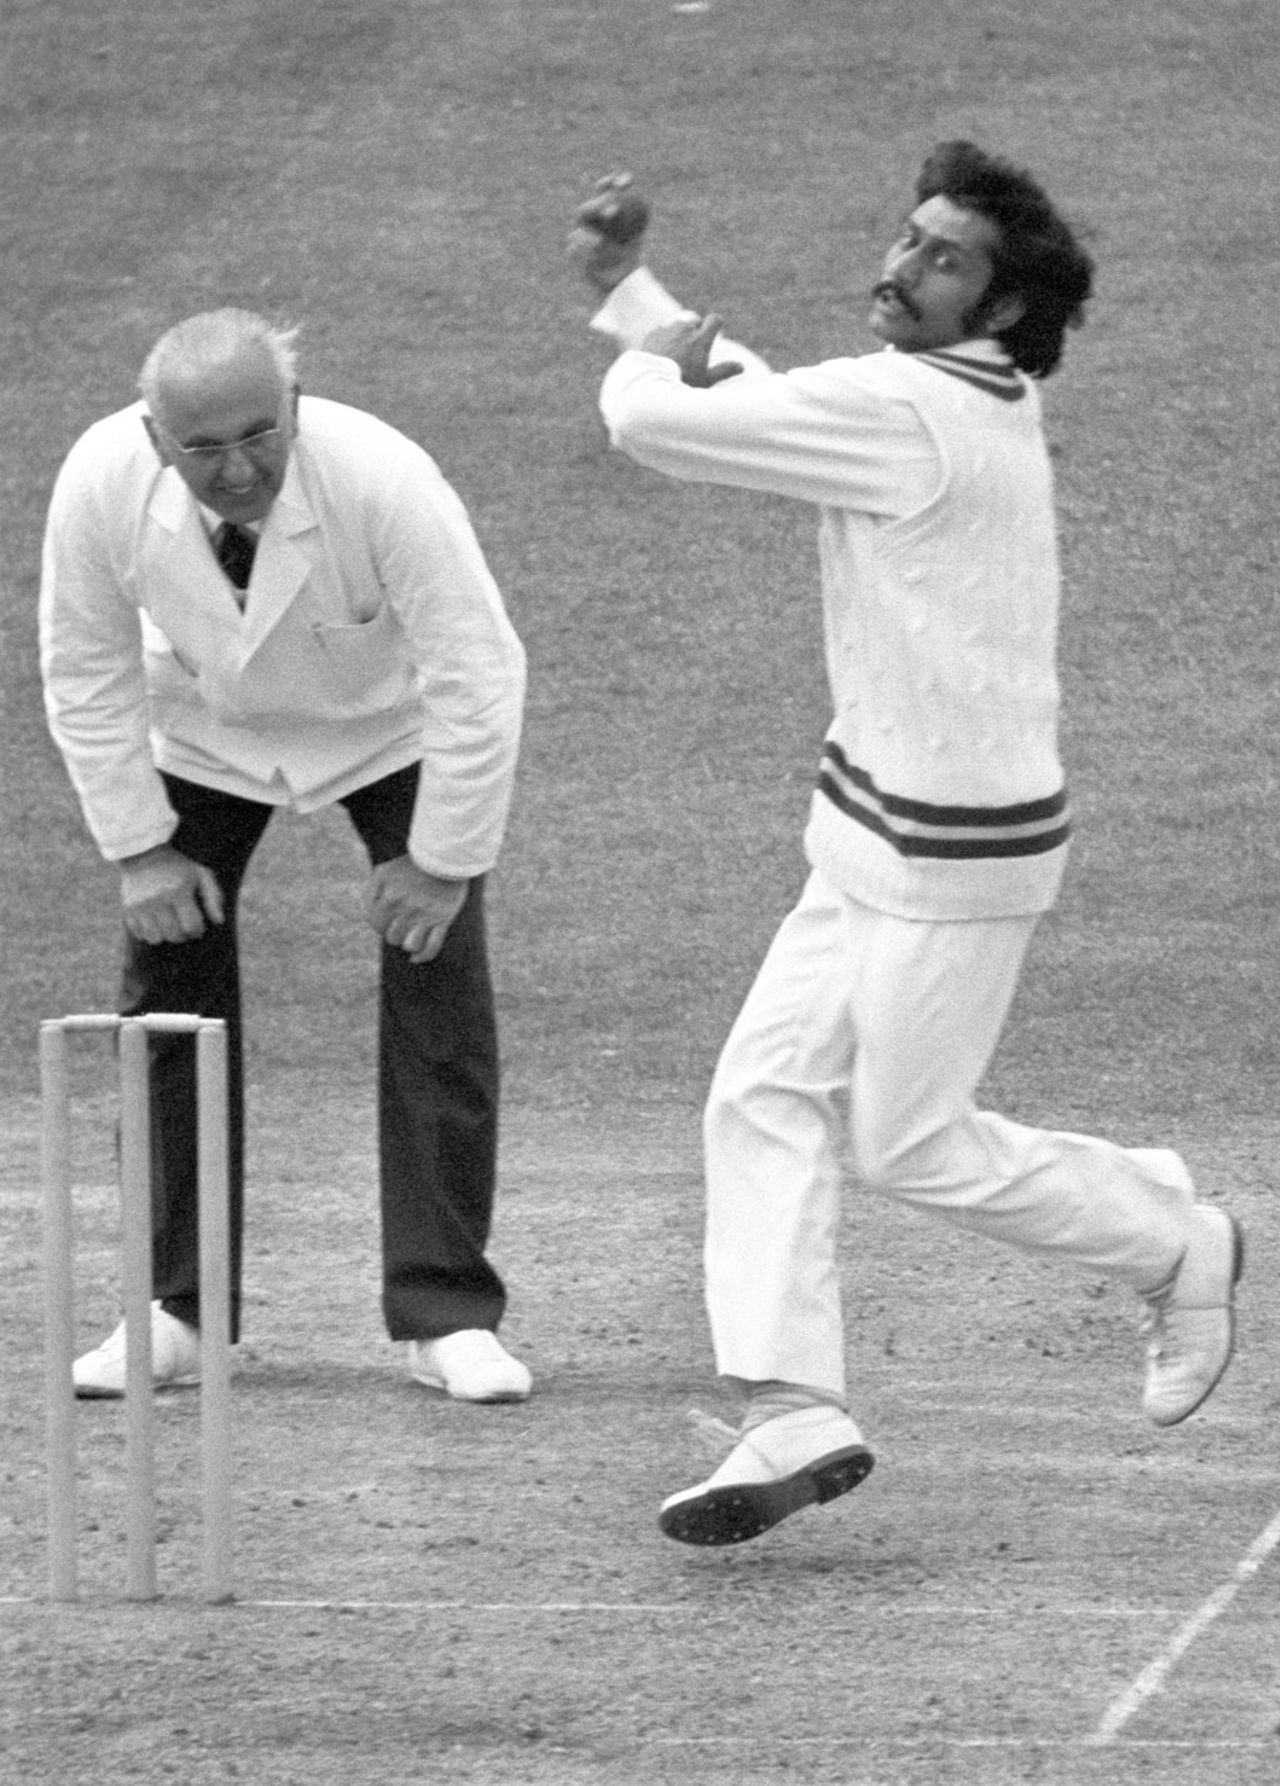 Wasim Raja bowling, Australia v Pakistan, Headingley, World Cup, June 7, 1975